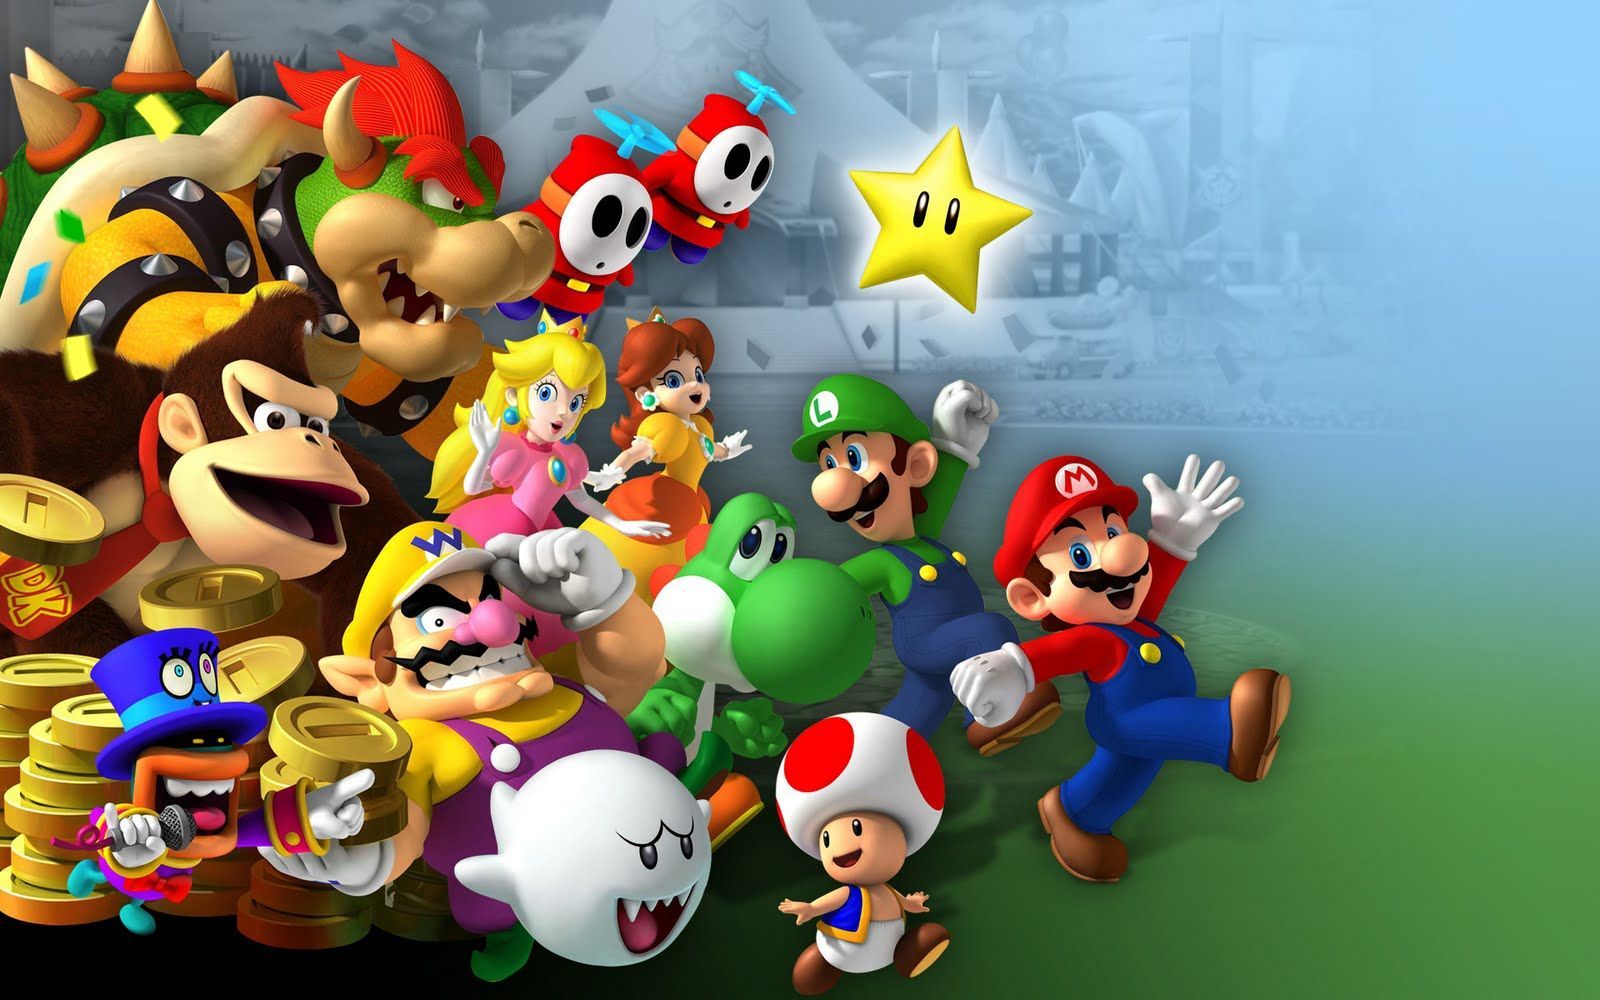 Super Mario Game Wallpaper Background. Mario and luigi, Mario party, Mario bros